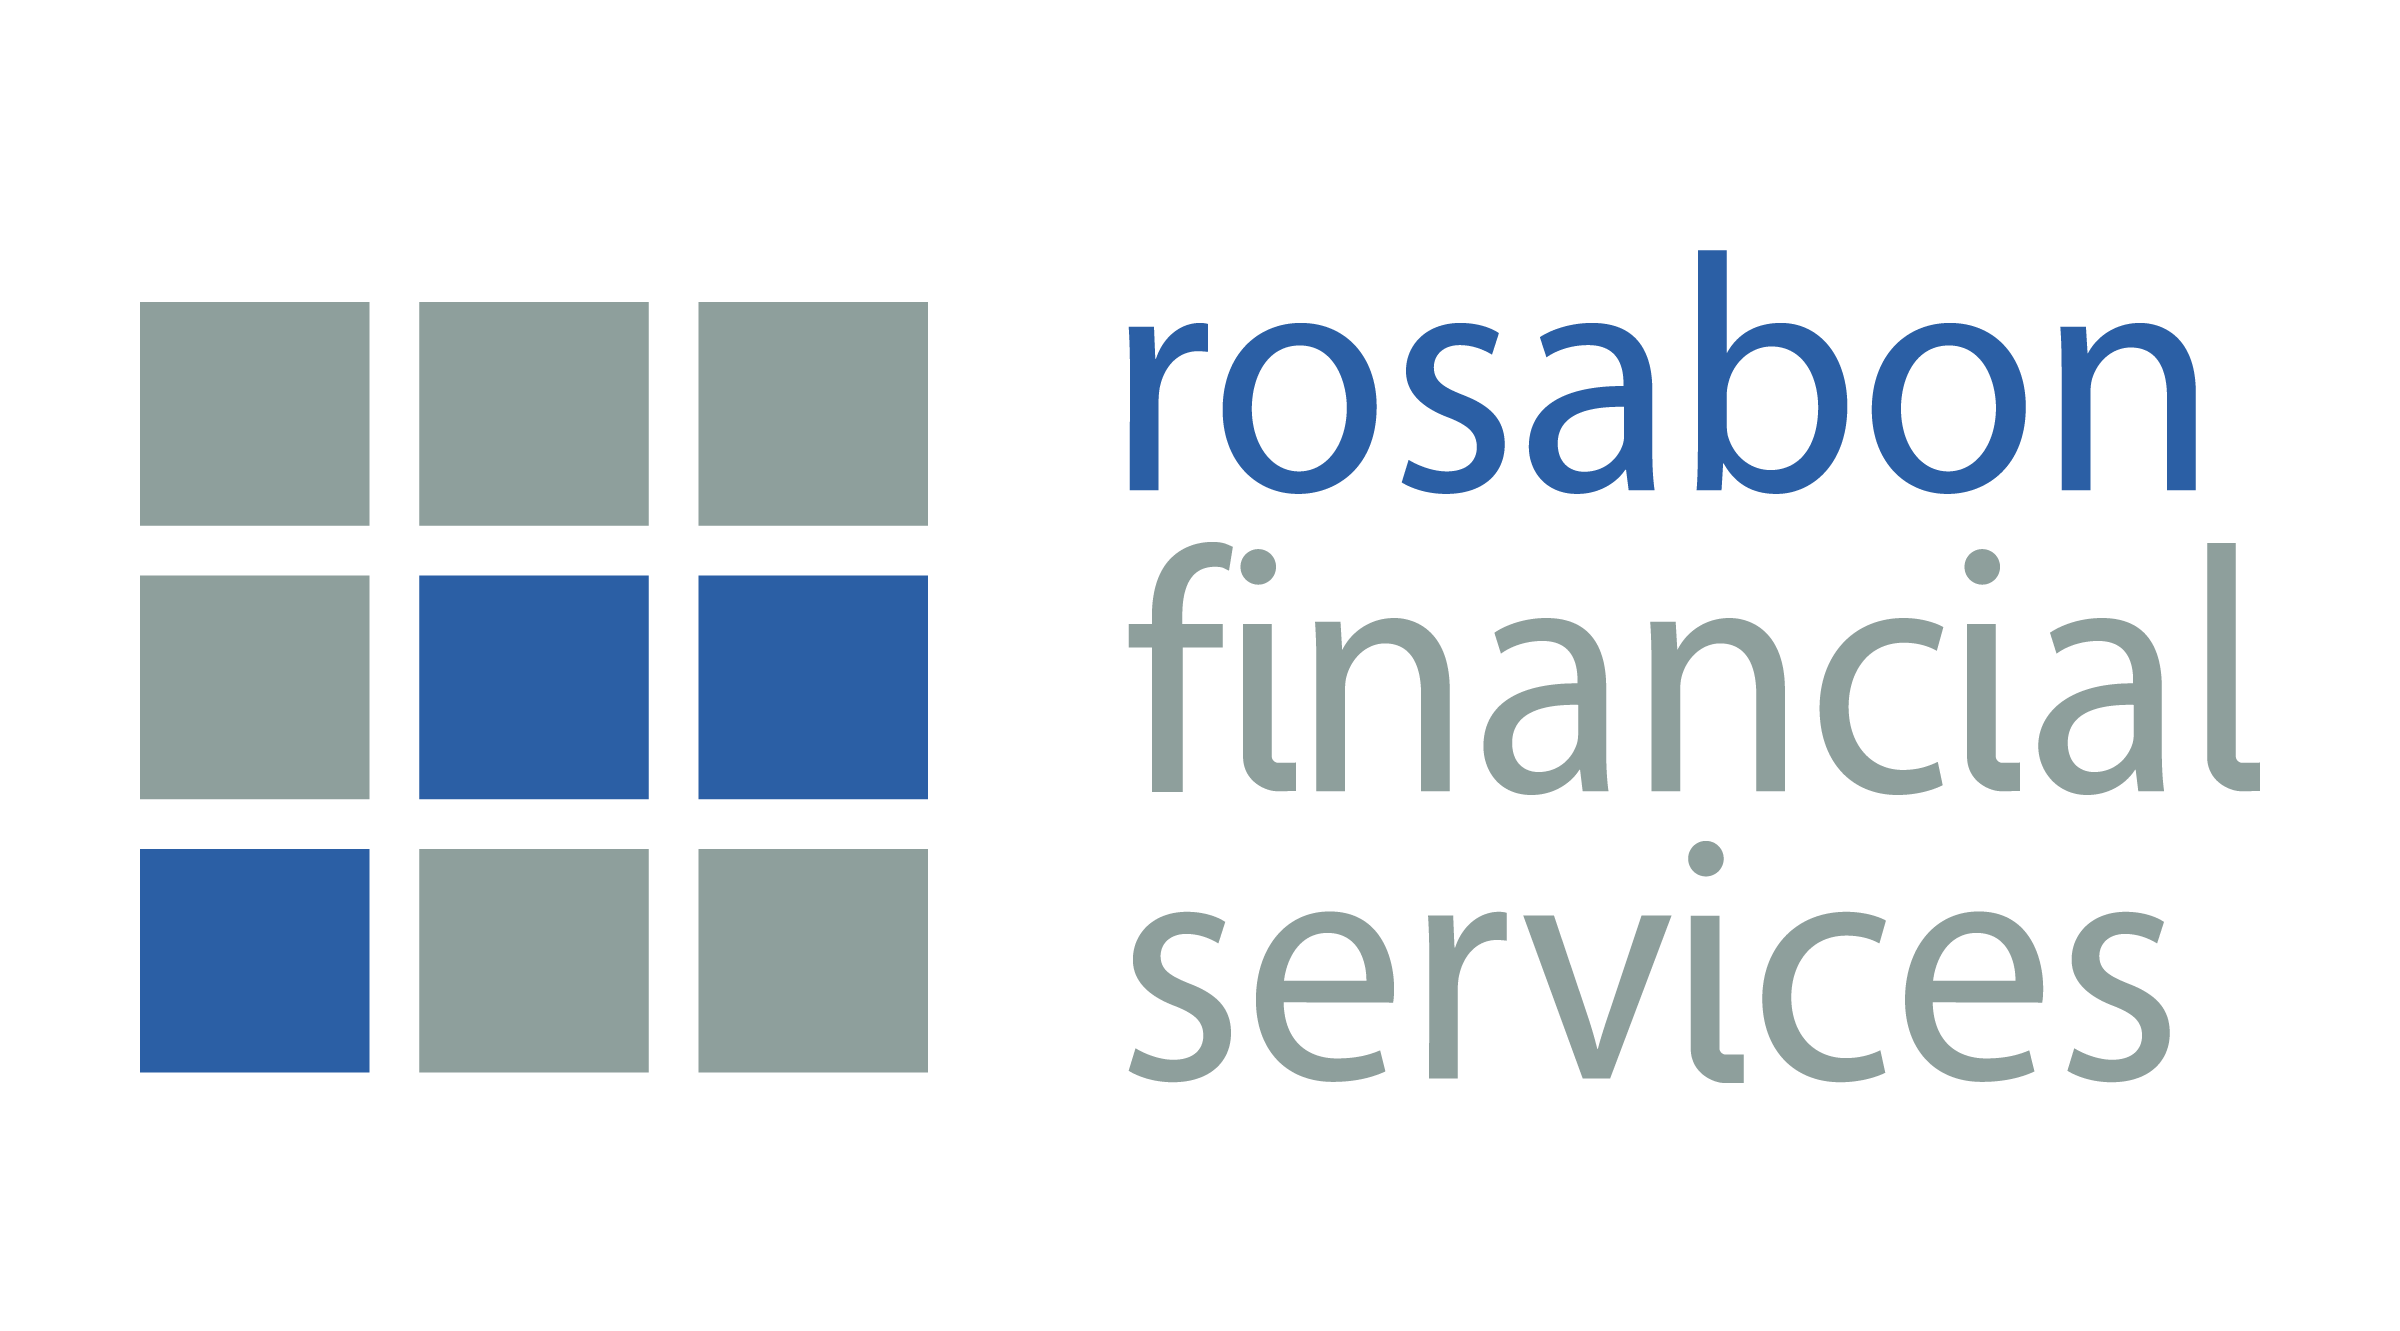 Rosabon Financial Services Limited